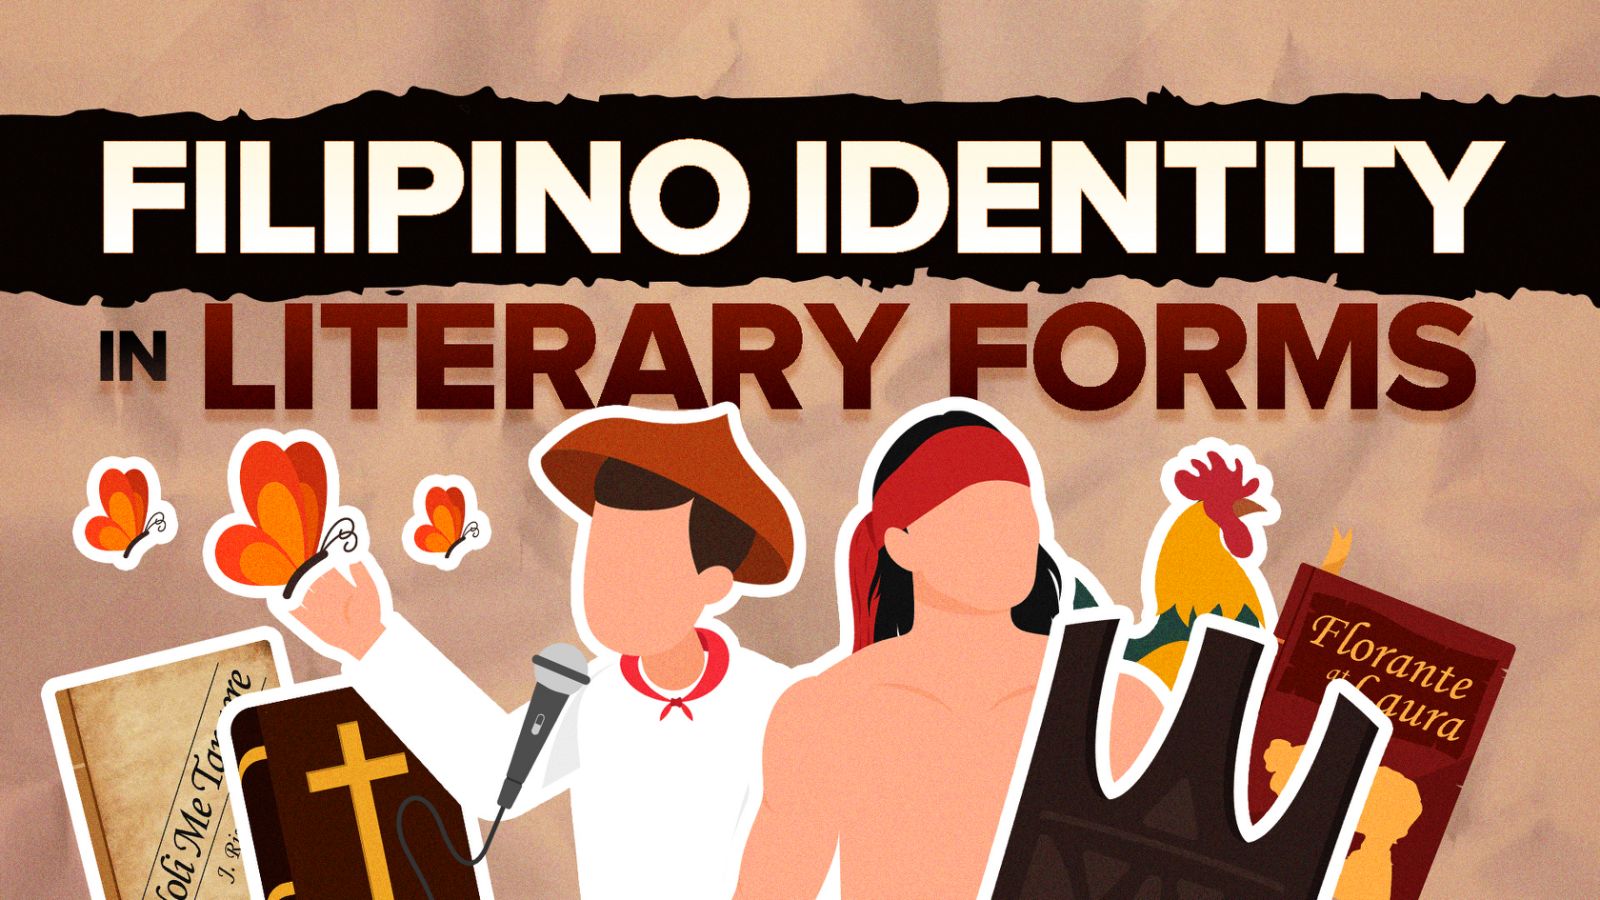 Filipino Identity in Literary Forms